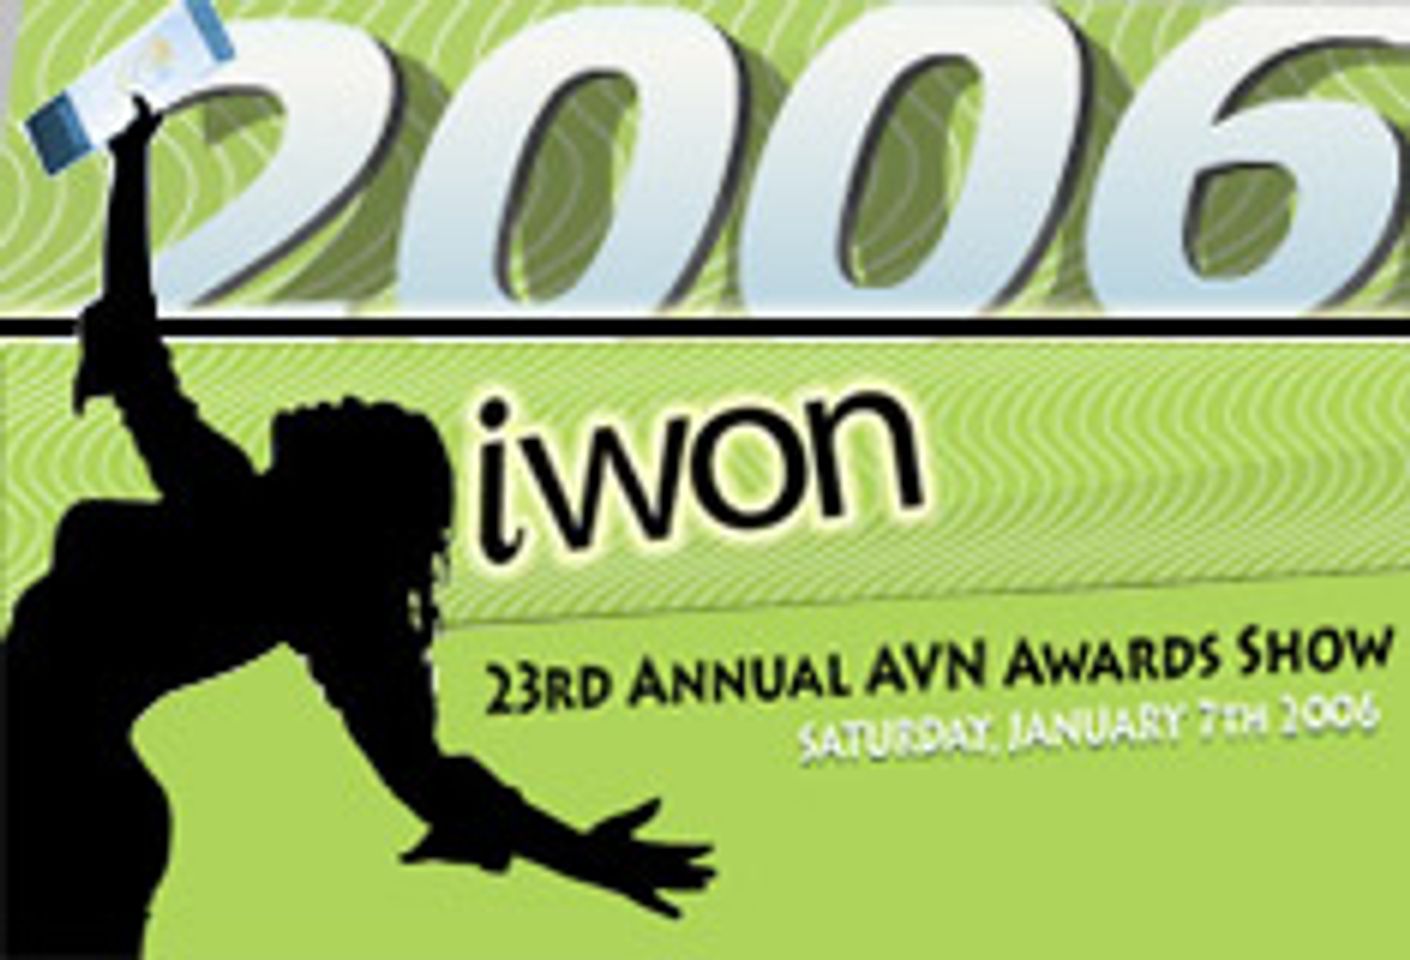 AVN Awards Pre-Nominations Website Now Open